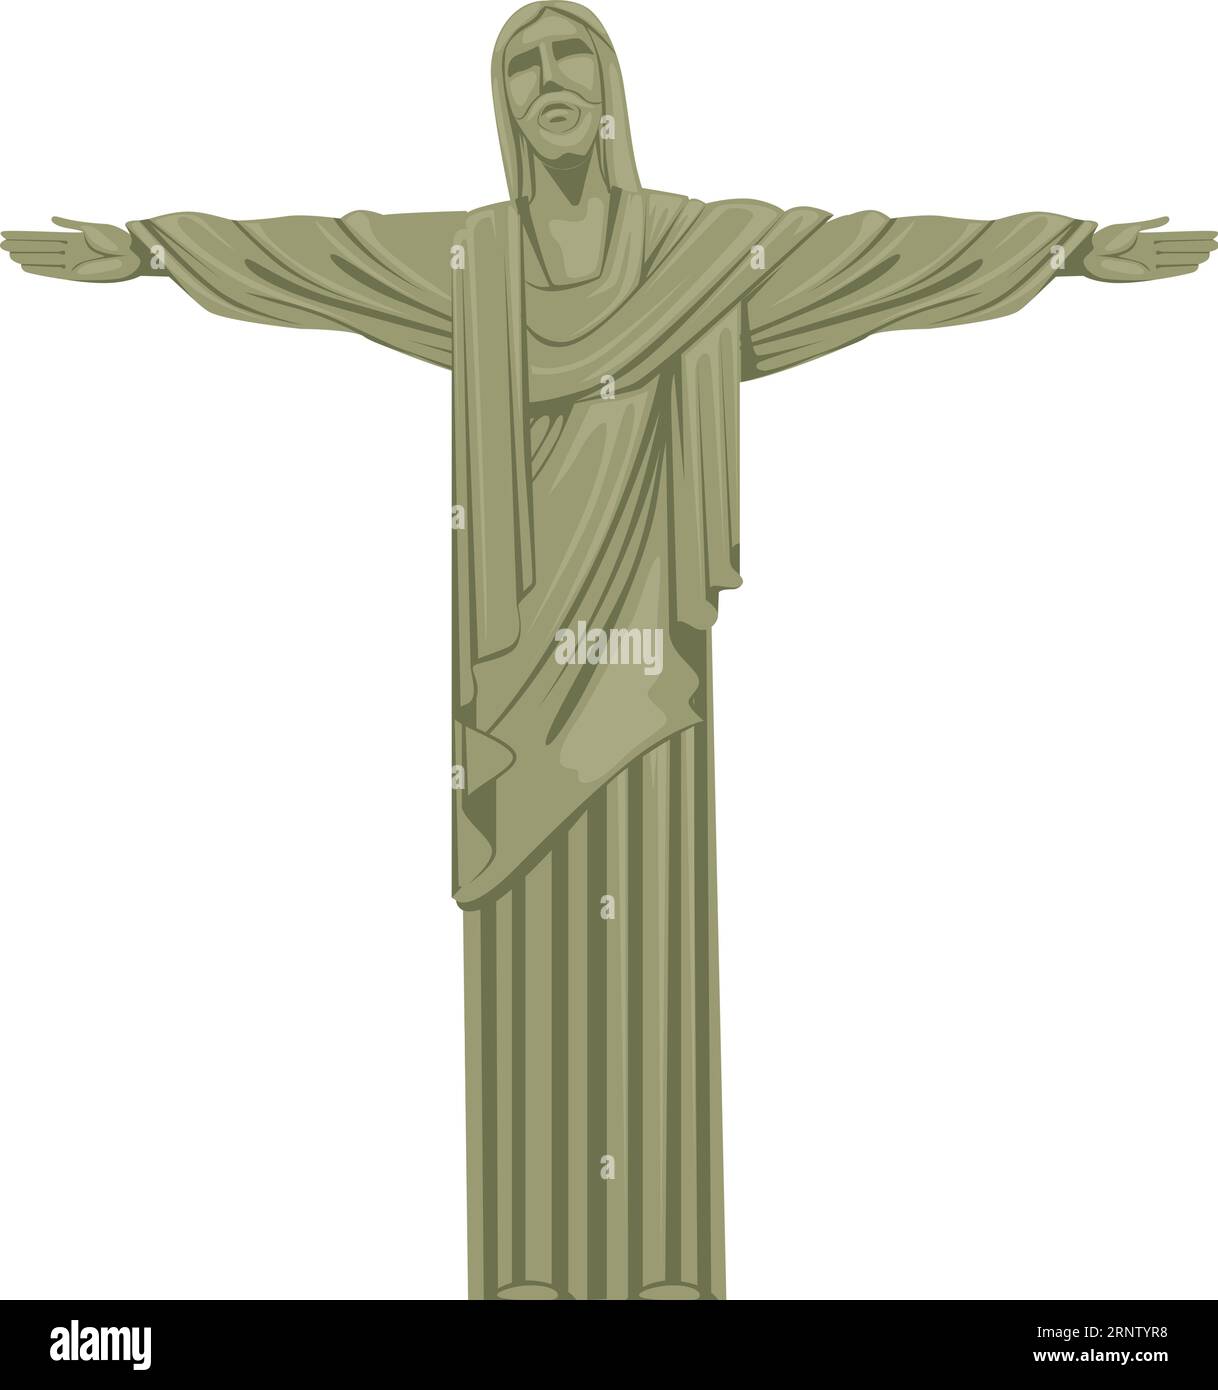 Jesus Christ statue. Brazilian travel landmark cartoon icon Stock Vector